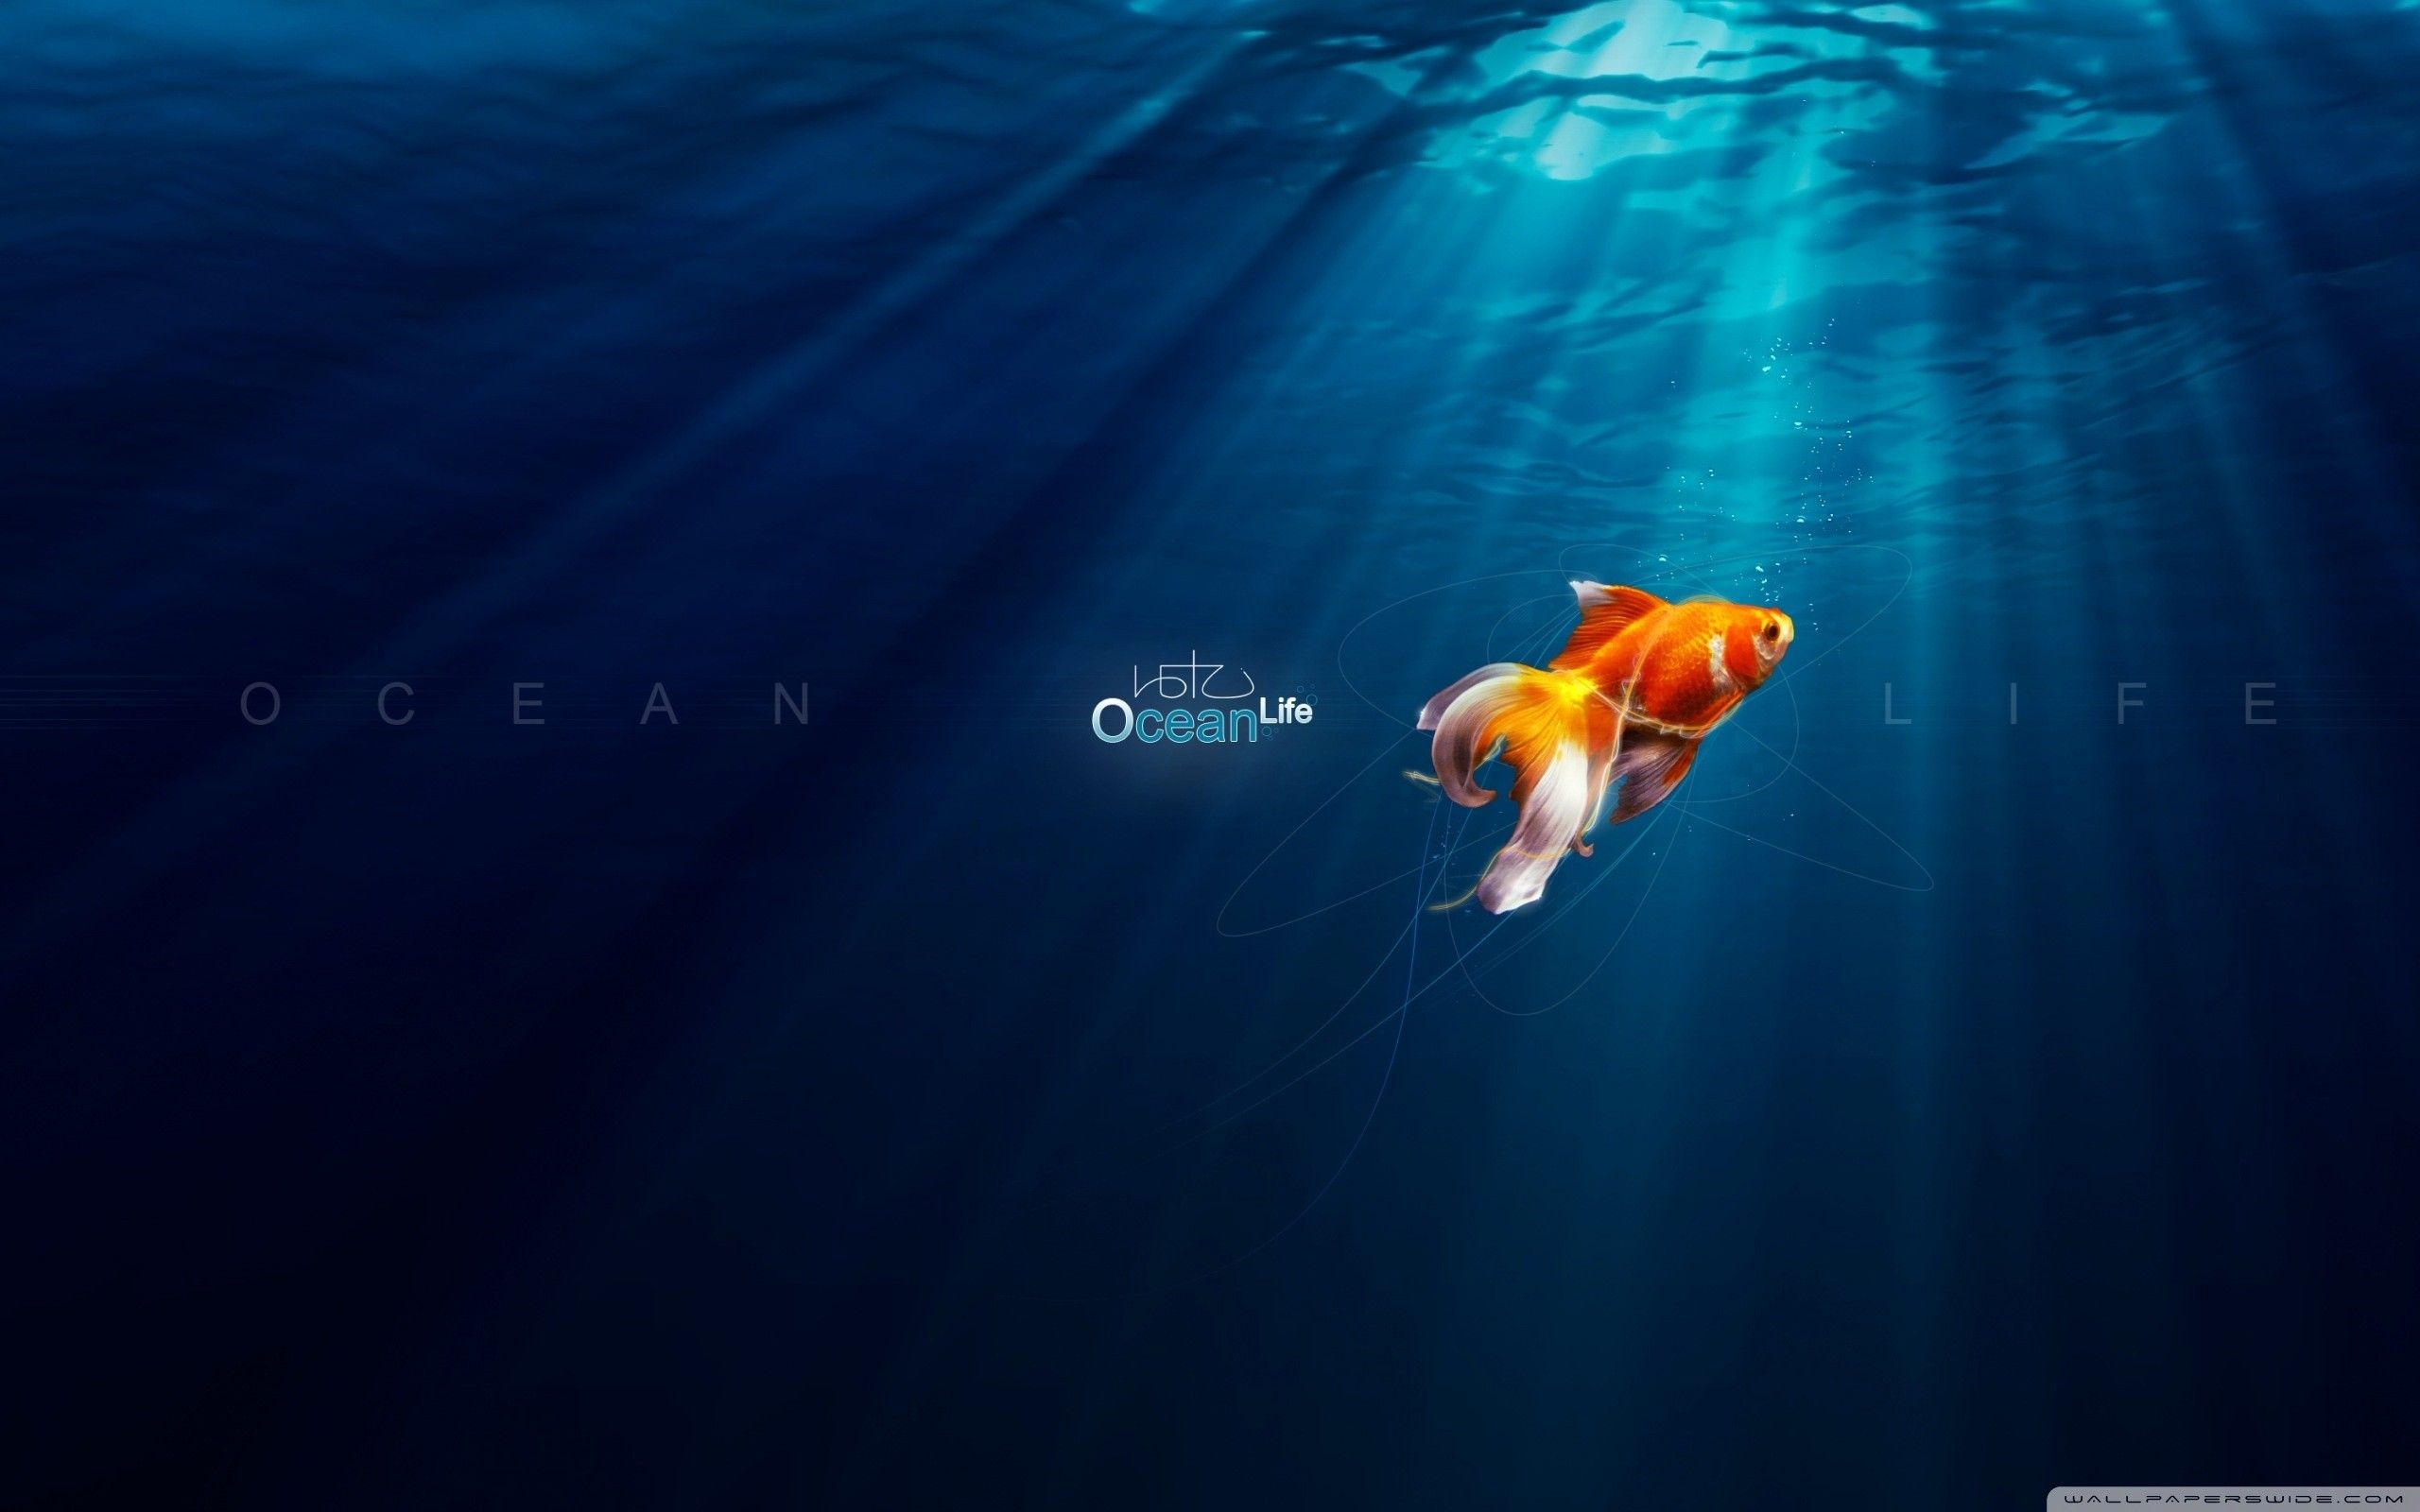 Ocean Life - New HD Backgrounds